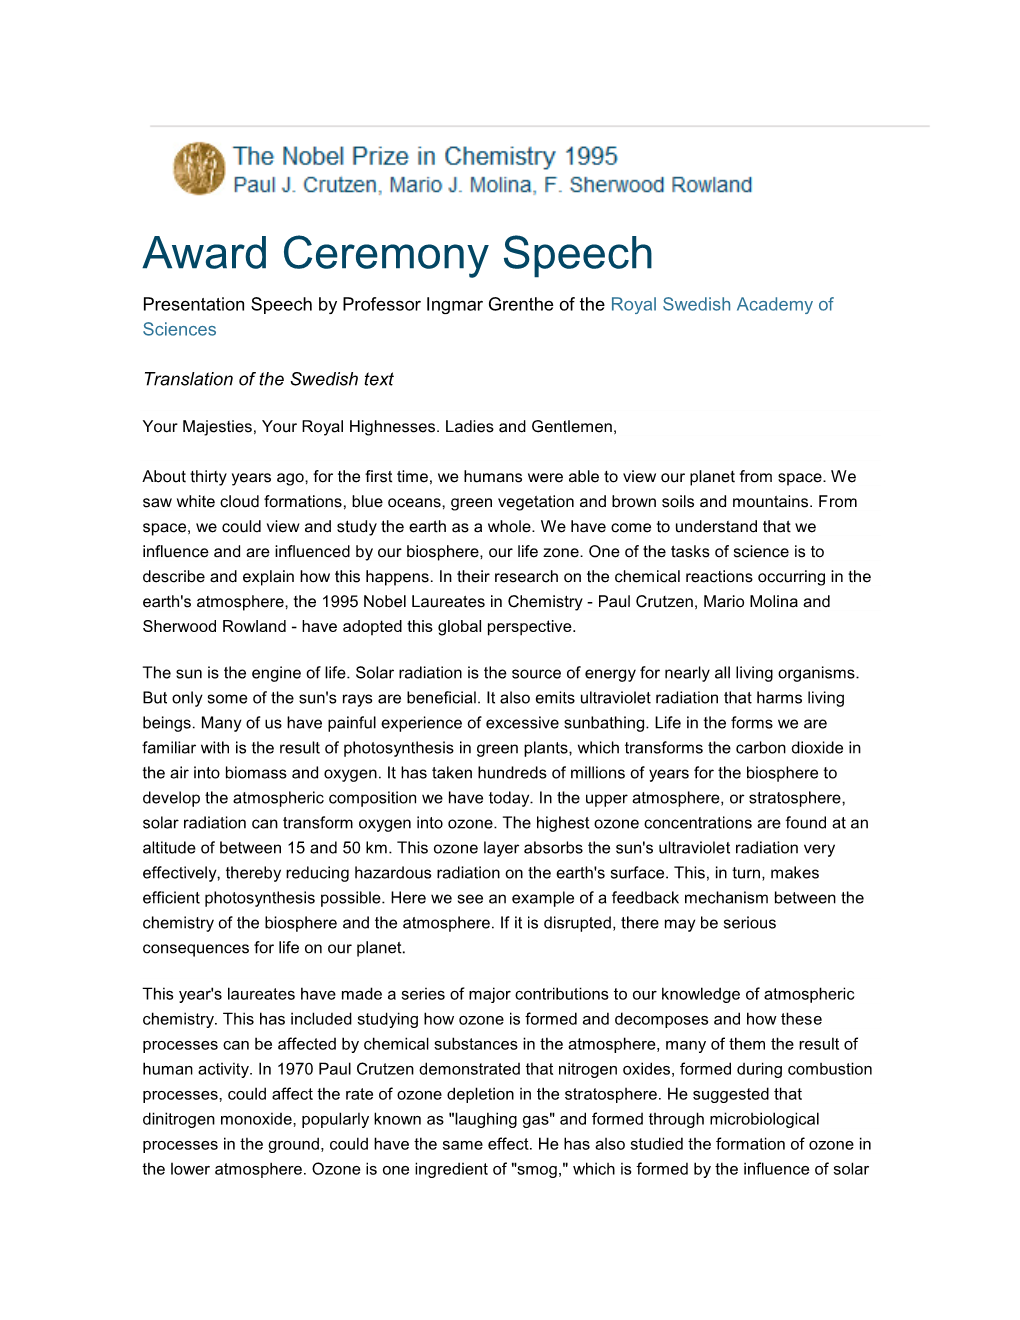 Award Ceremony Speech Presentation Speech by Professor Ingmar Grenthe of the Royal Swedish Academy of Sciences